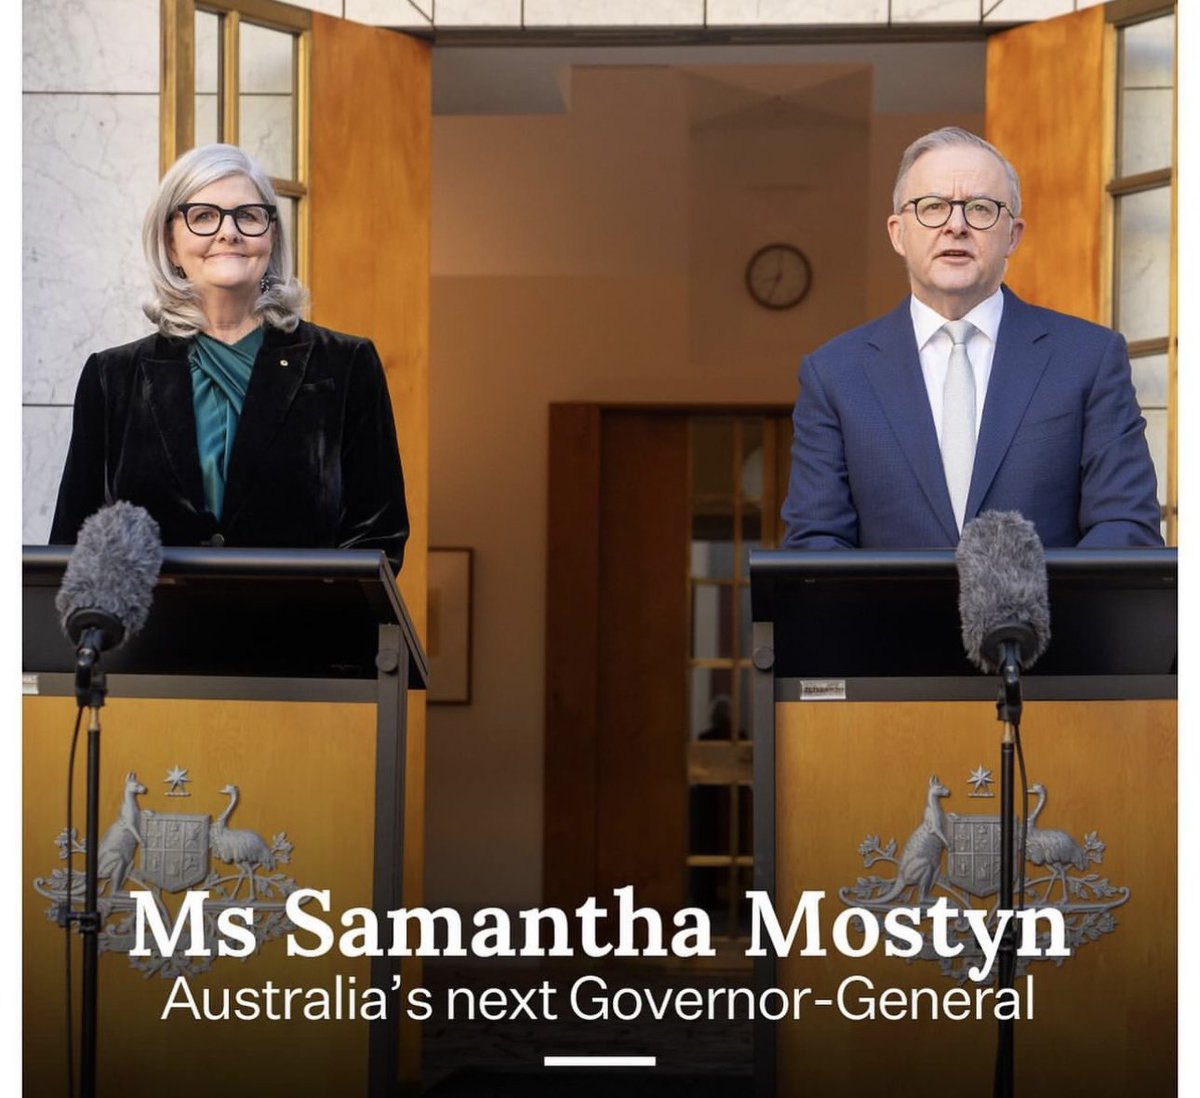 Sam Mostyn, Australia’s next Governor-General. So very proud of Sam. 👏👏🇦🇺🇦🇺